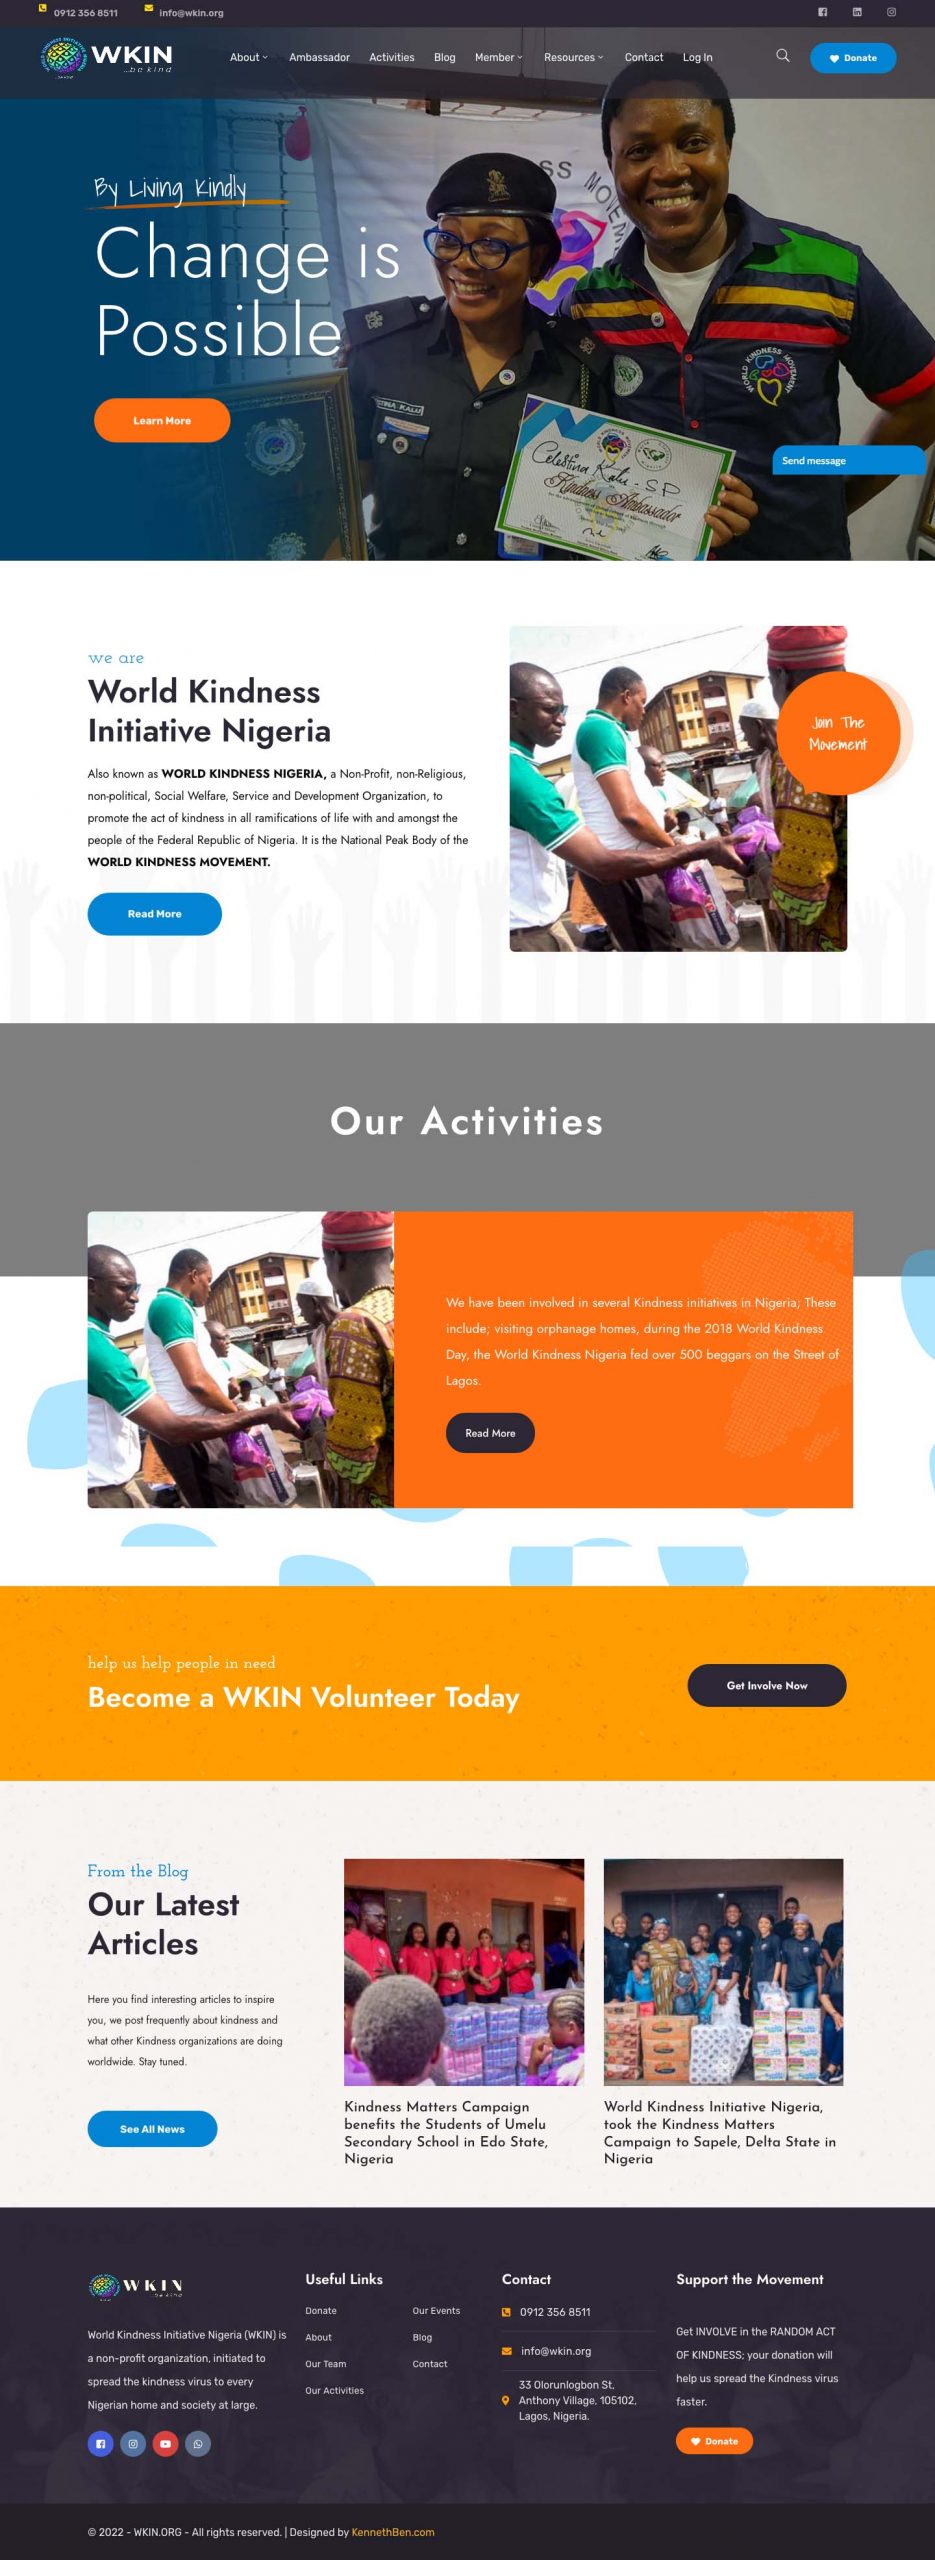 World Kindness Initiative Nigeria